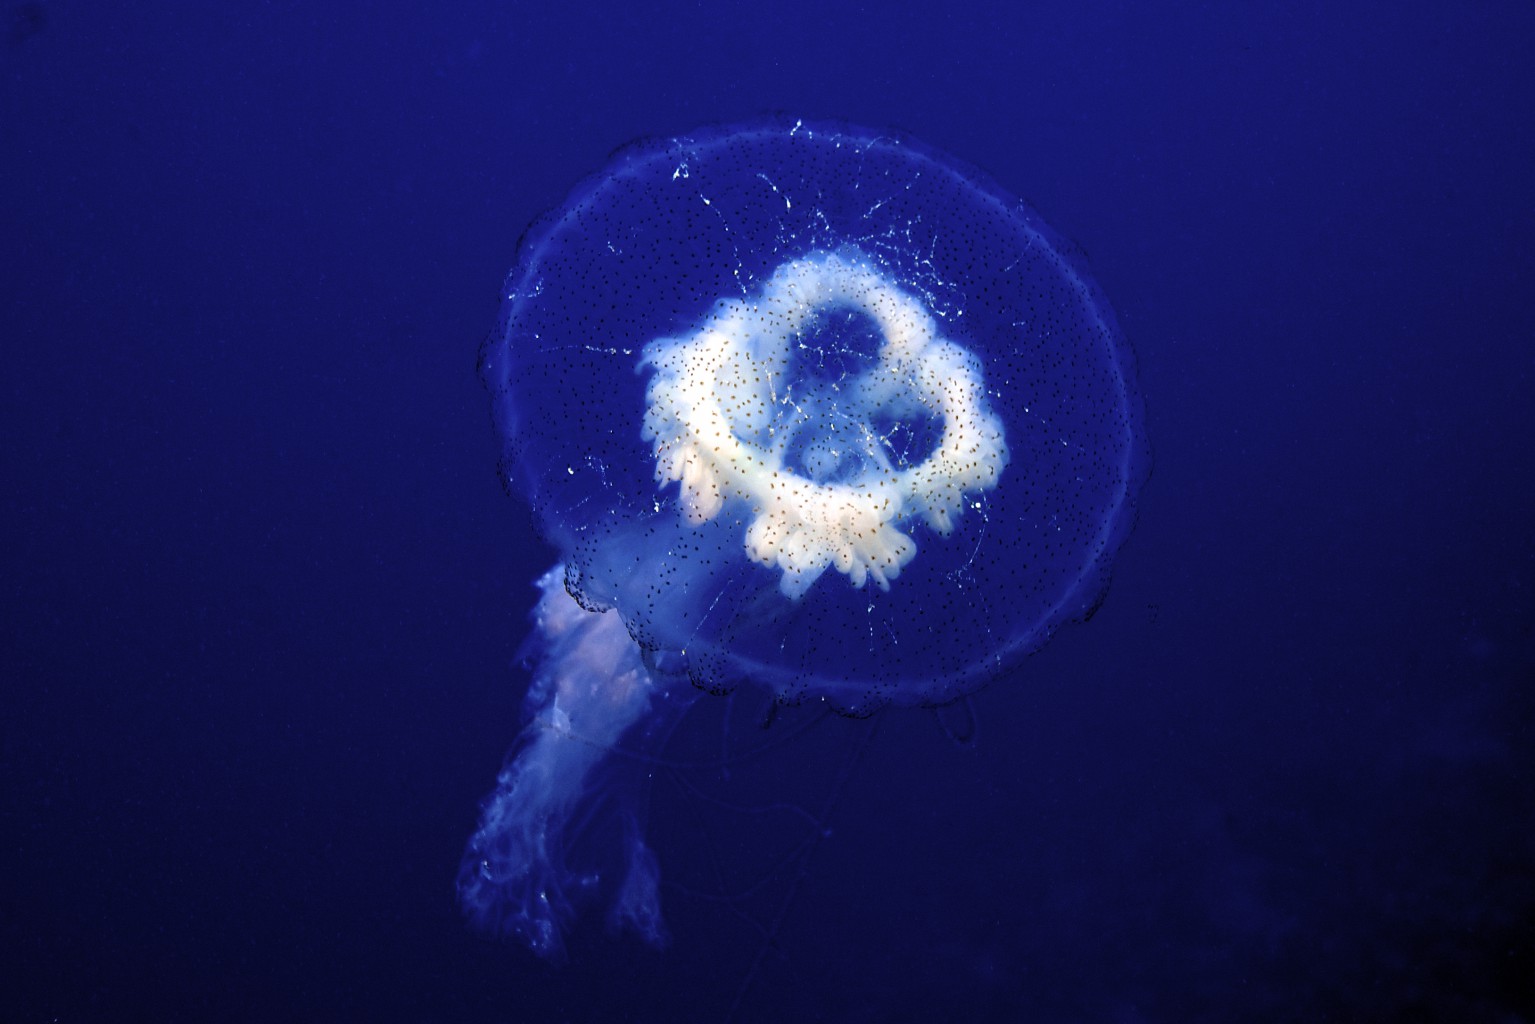 Photogenic Jellyfish invasion, Red Sea, Egypt